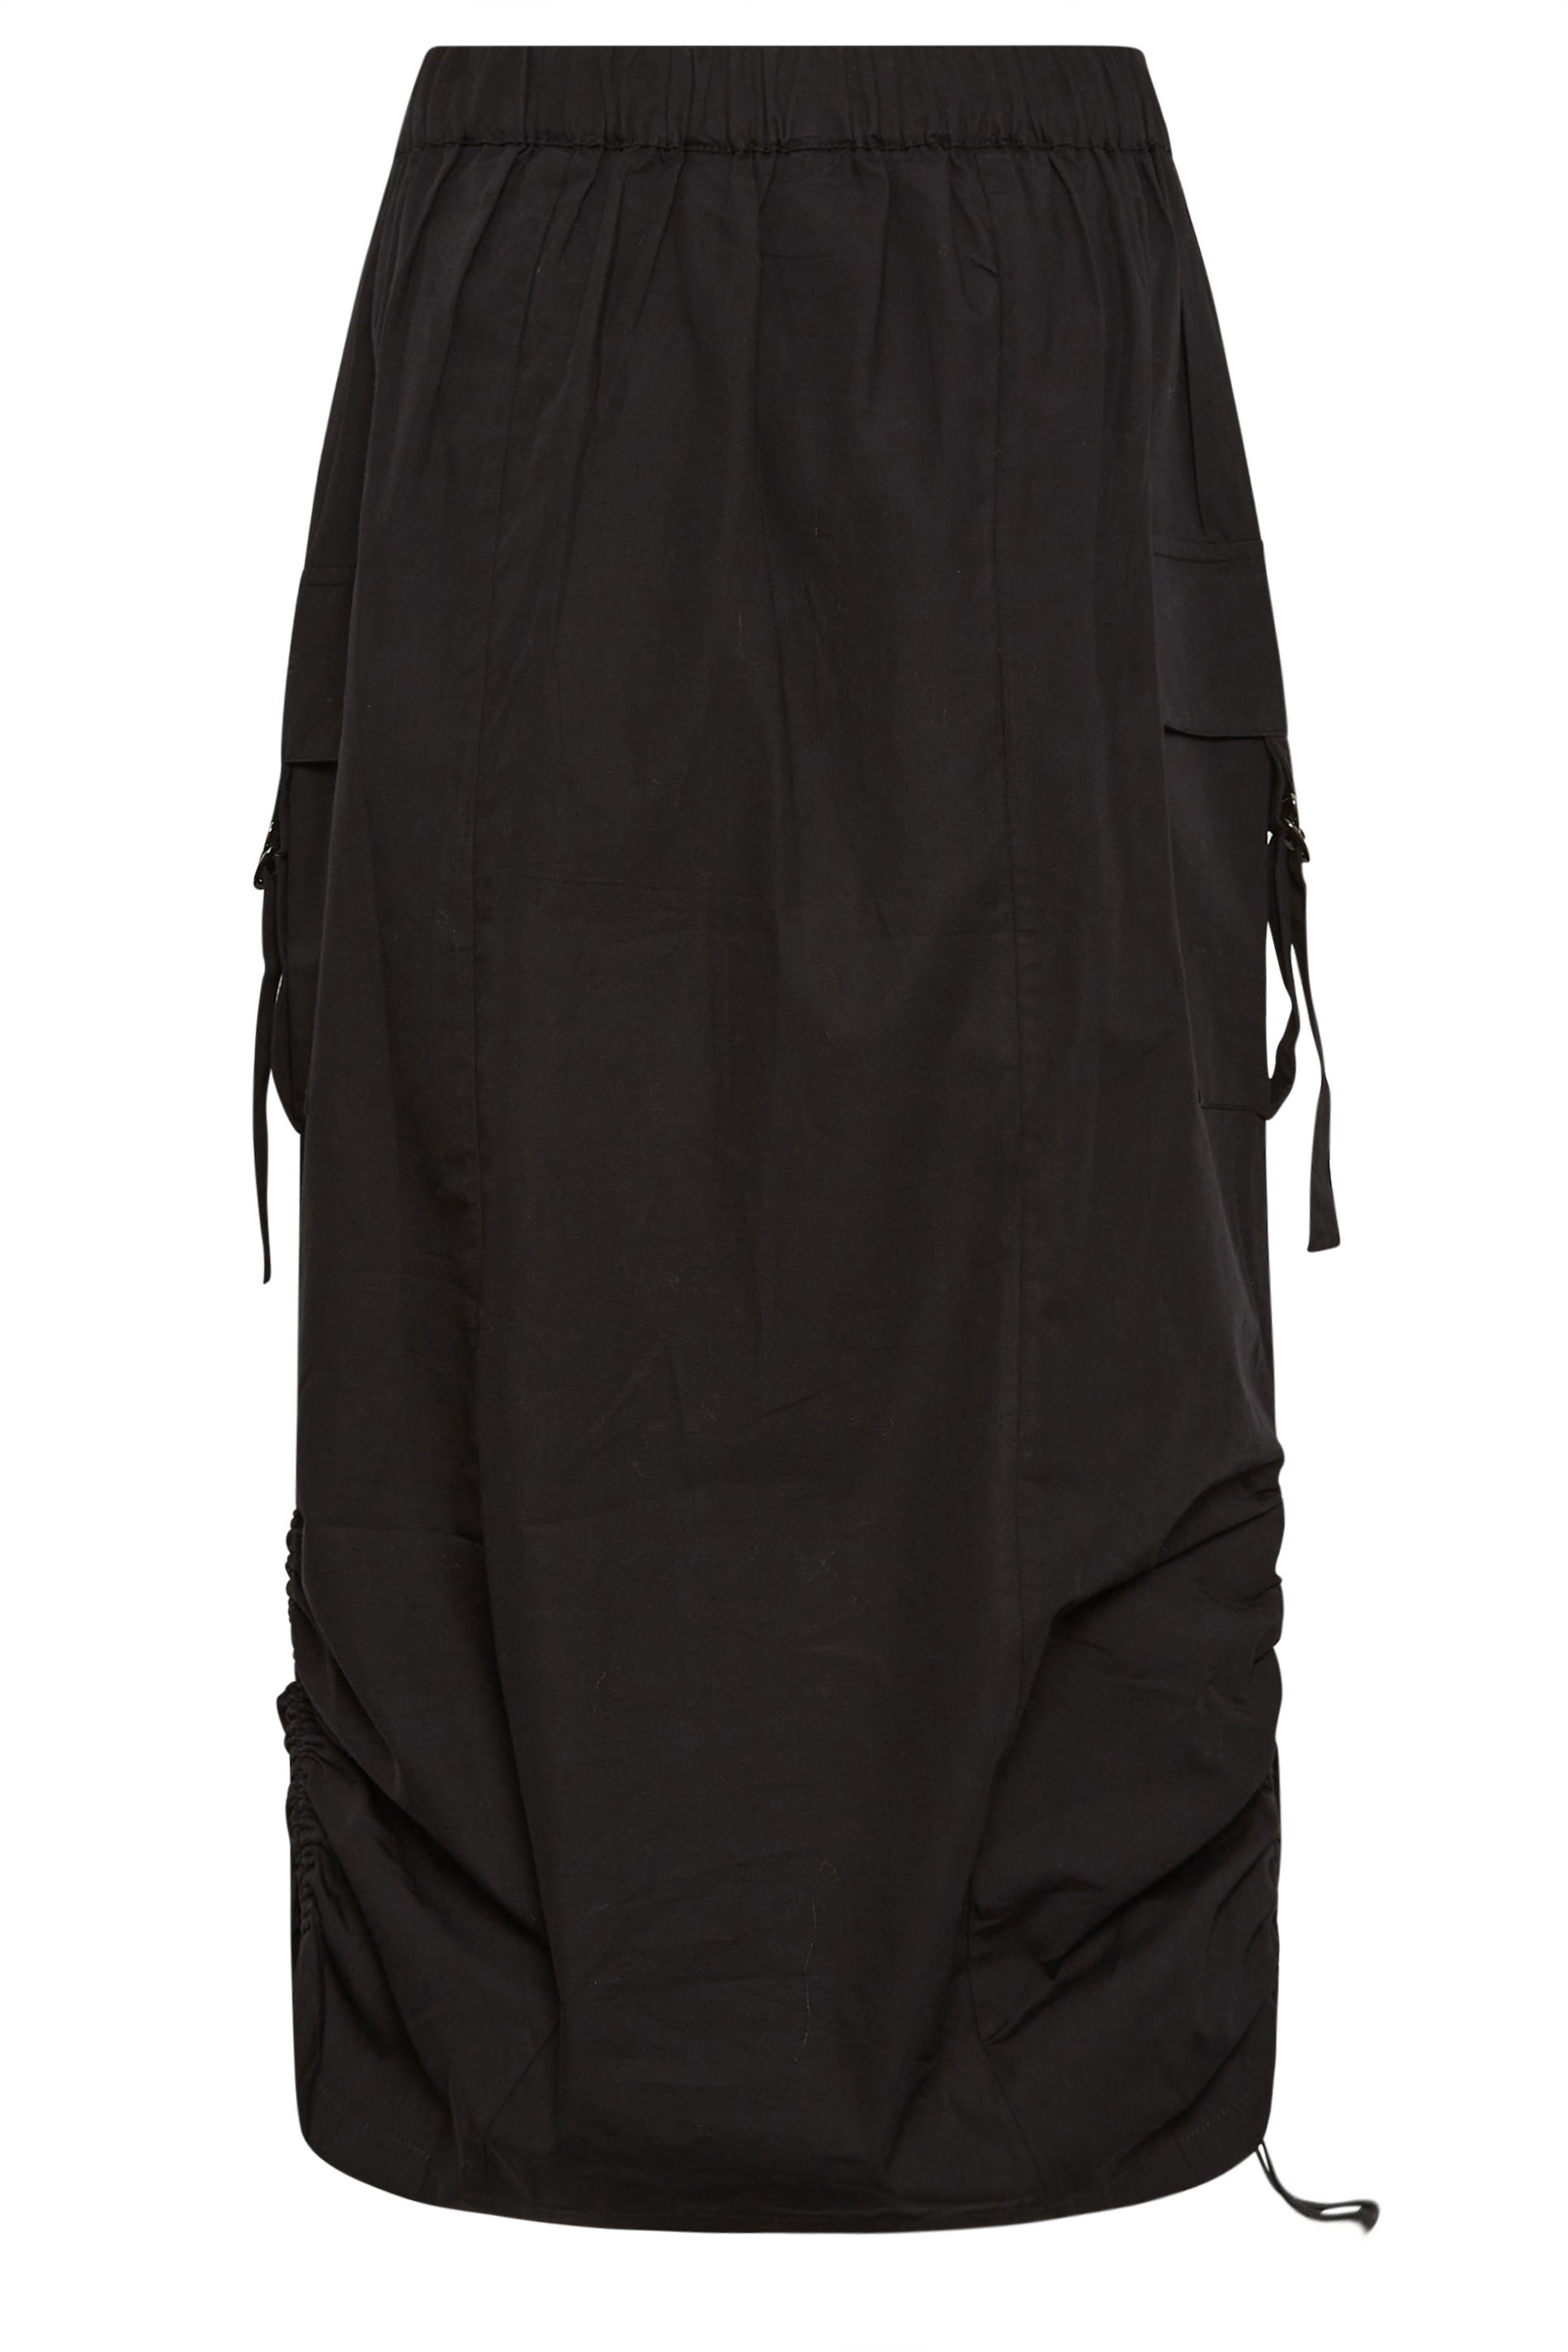 PixieGirl Black Cargo Ruched Midi Skirt | PixieGirl